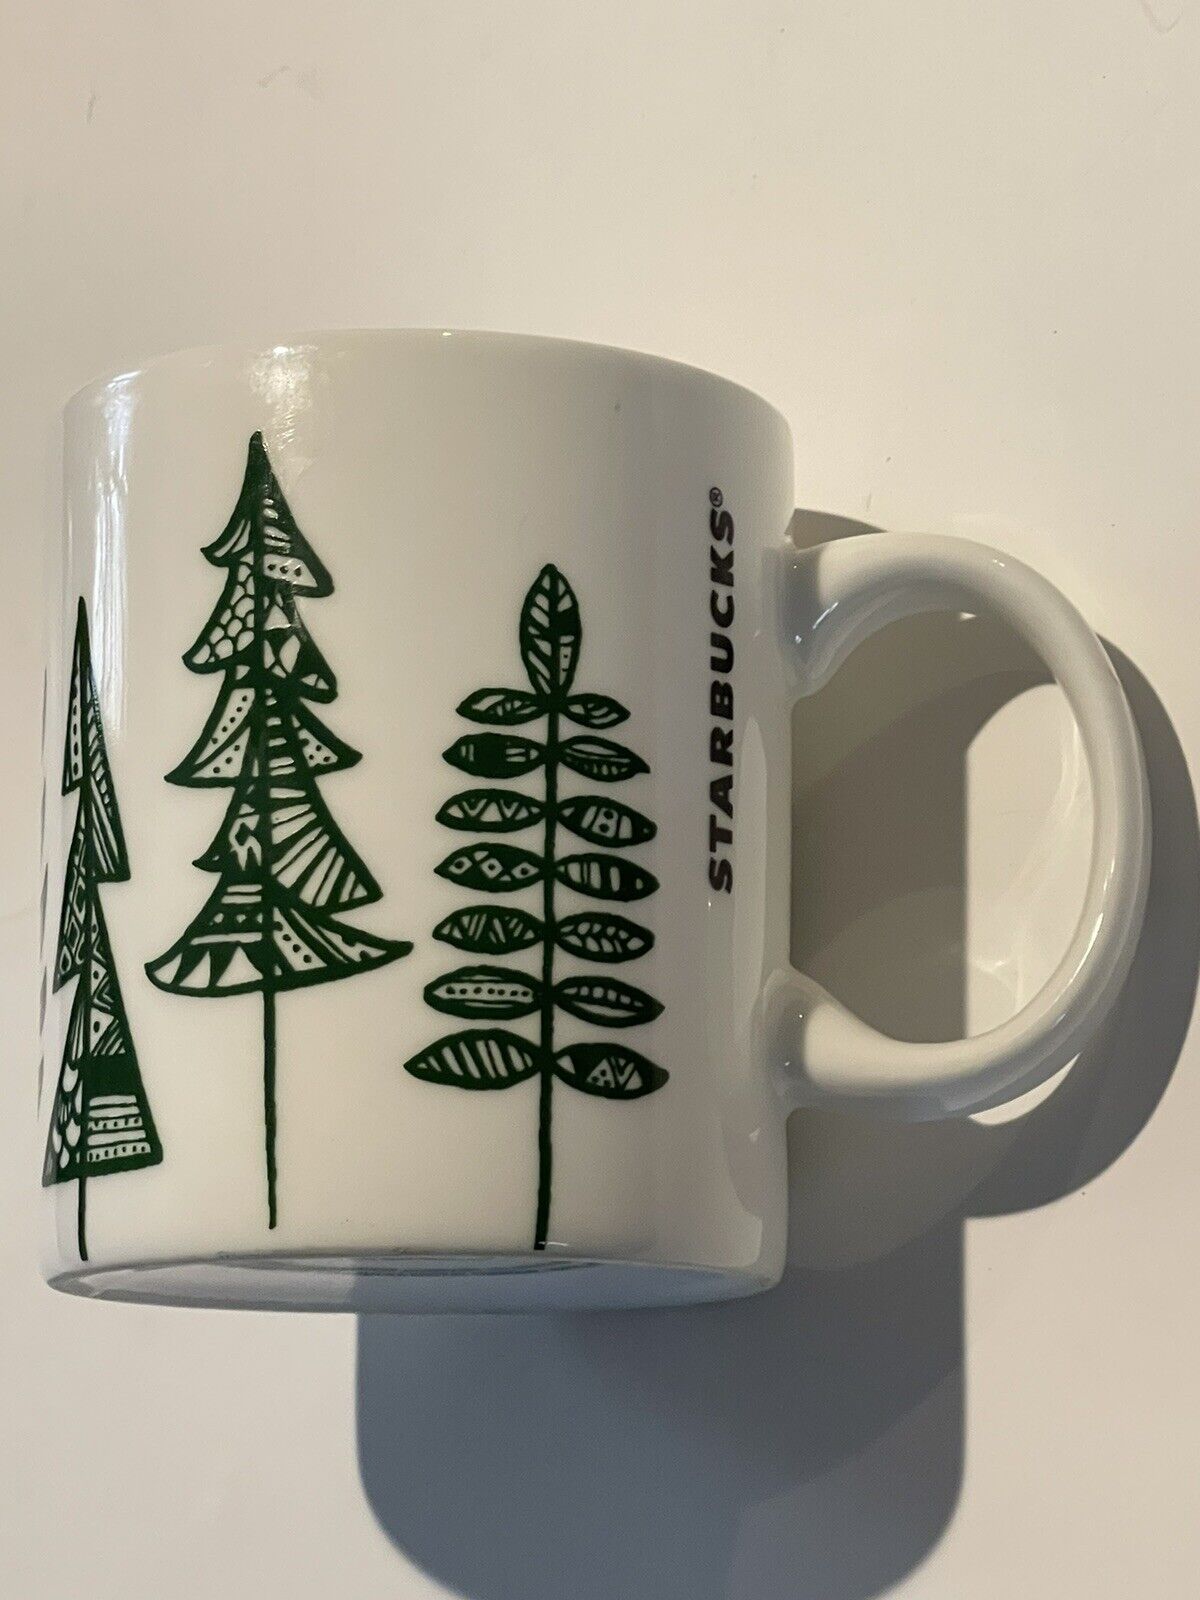 Starbucks Christmas Tree Coffee Mug 12 Fl Oz Green White 2015 Holiday Cup